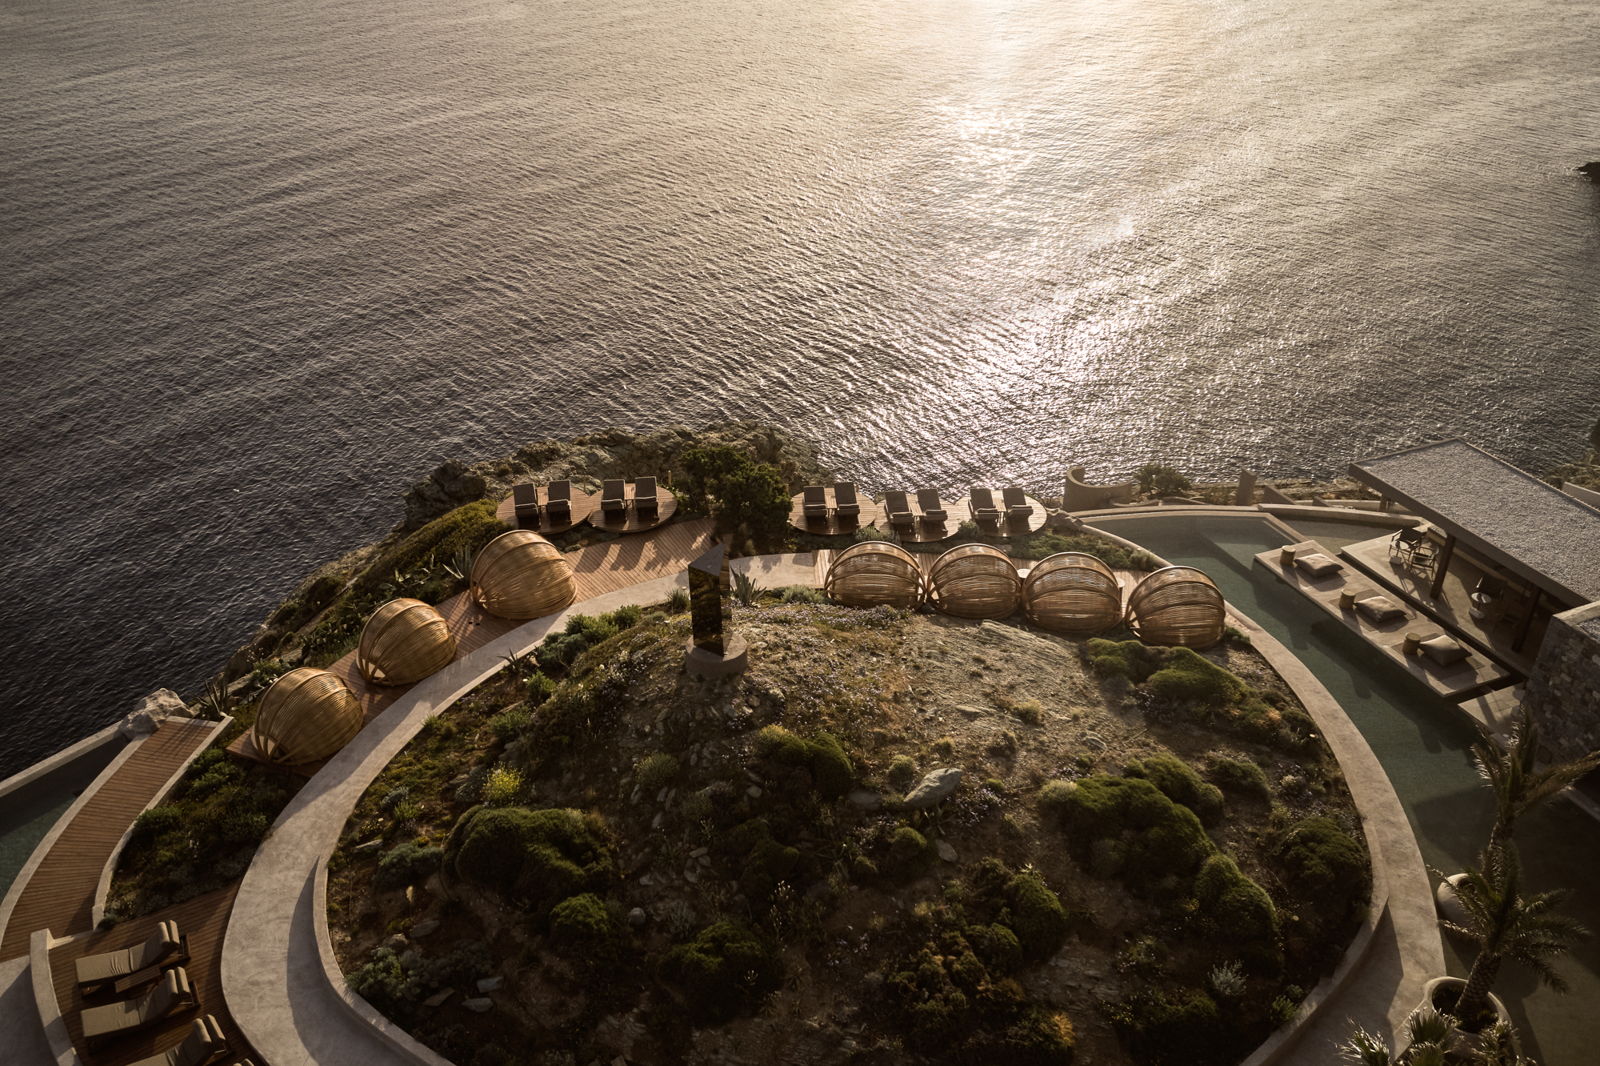 Acro Suites: Αυτό είναι το πιο θεαματικό ξενοδοχείο της Κρήτης – Στέκεται πάνω σε έναν εντυπωσιακό γκρεμό